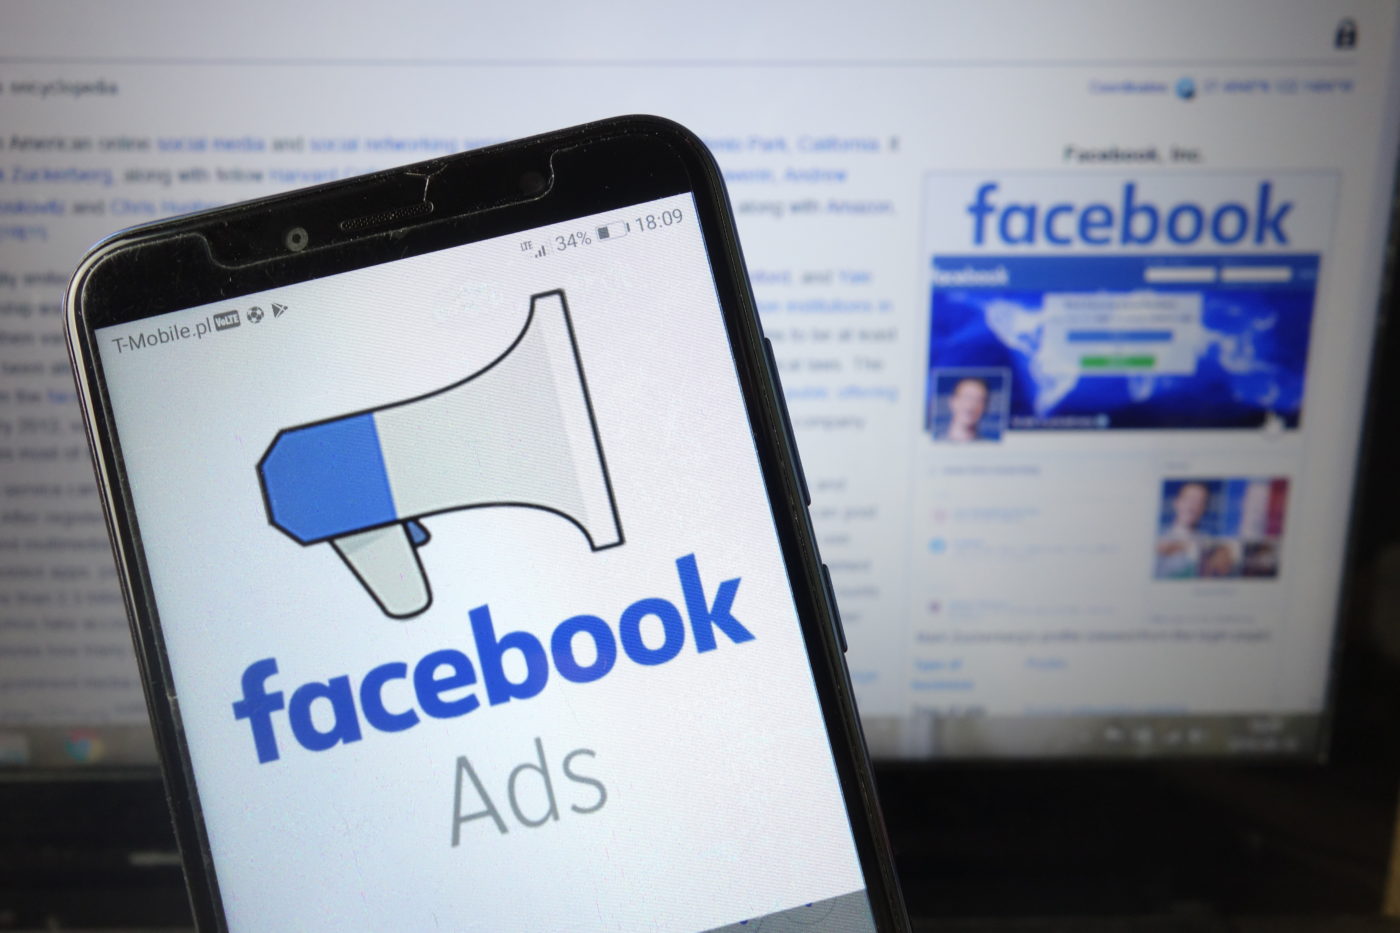 Facebook Ads logo displayed on mobile phone